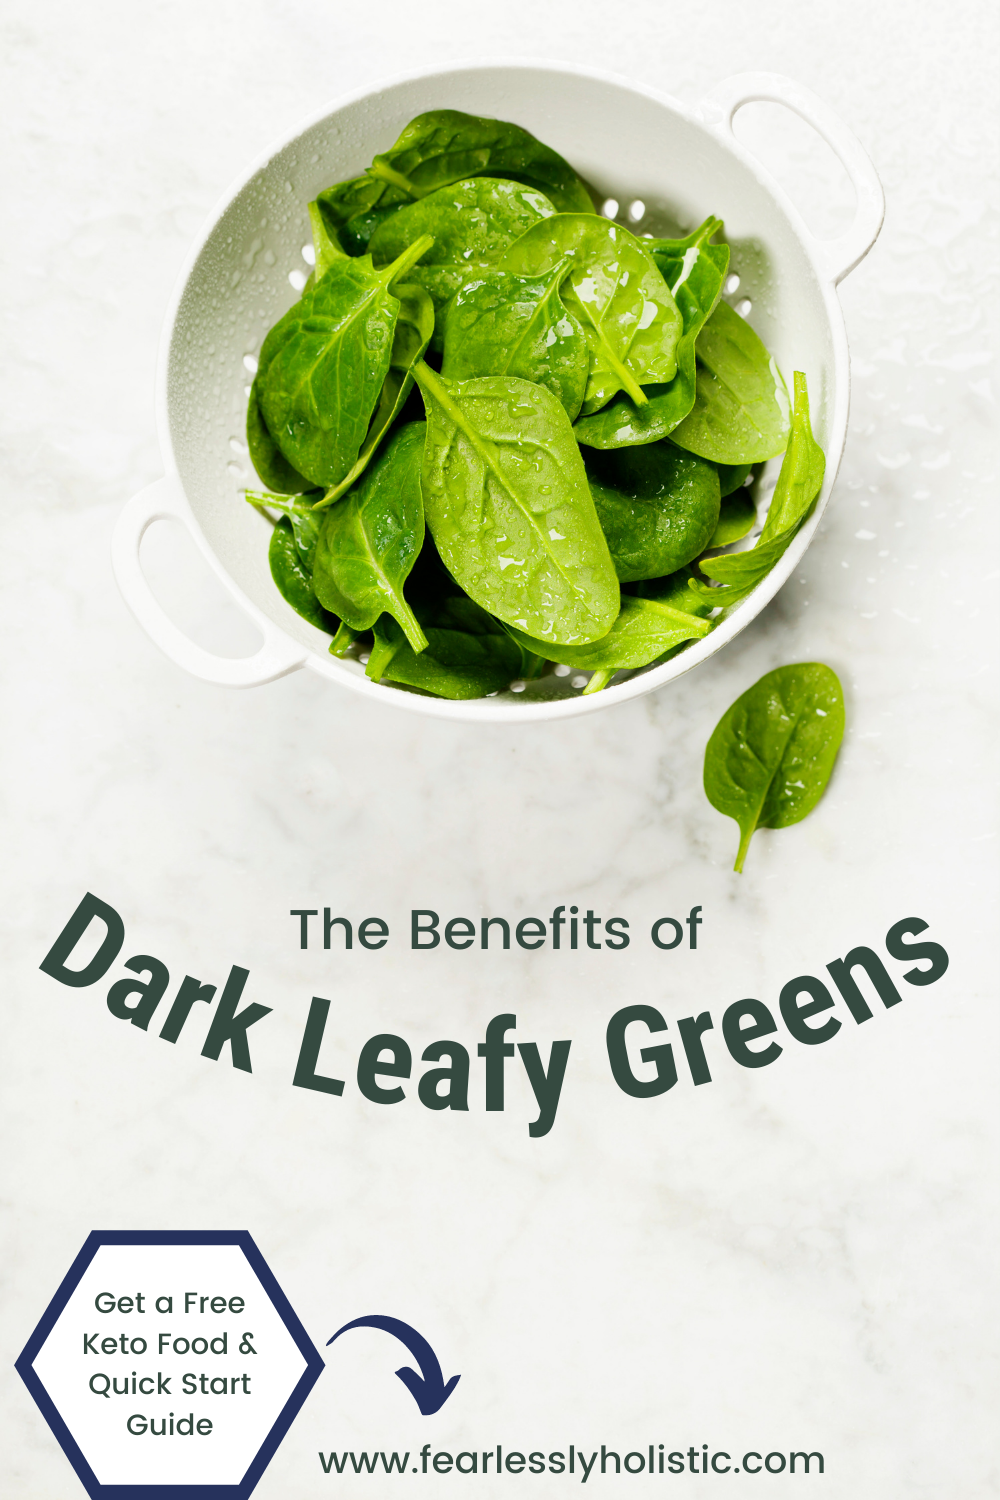 The Benefits of Dark Leafy Greens